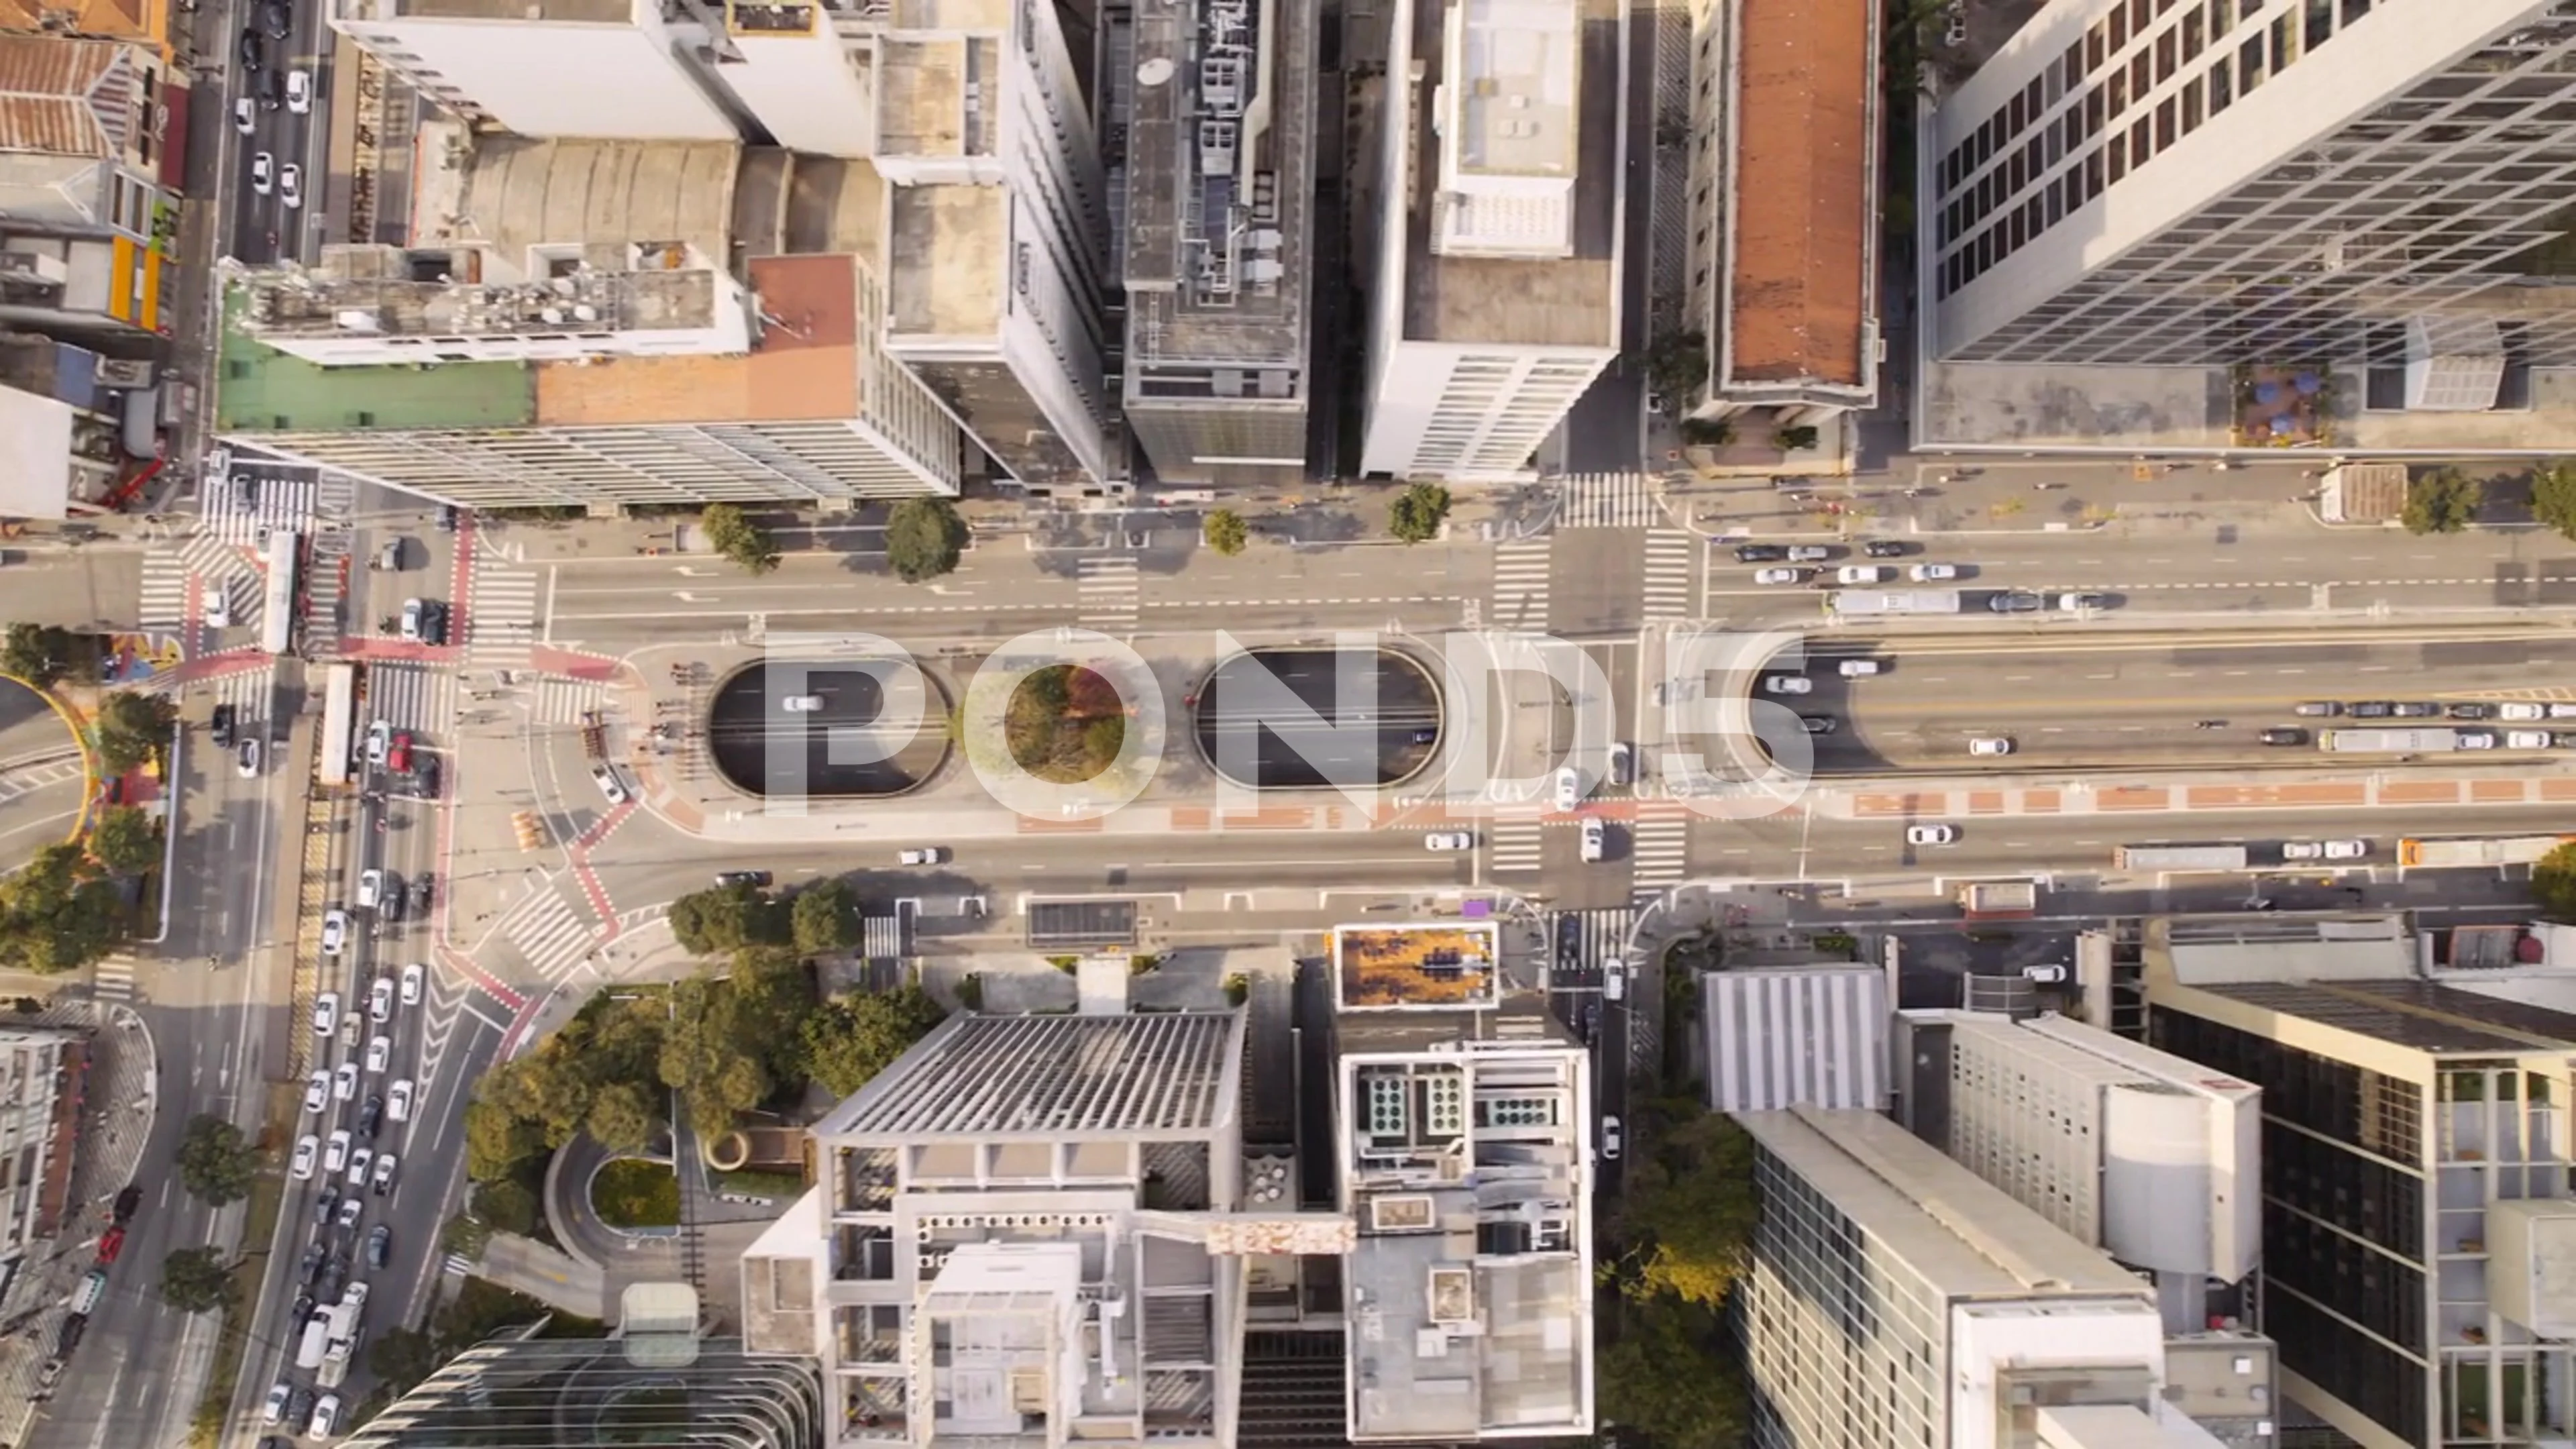 Aerial view of the Avenida Paulista and Sao Paulo Brazil Stock